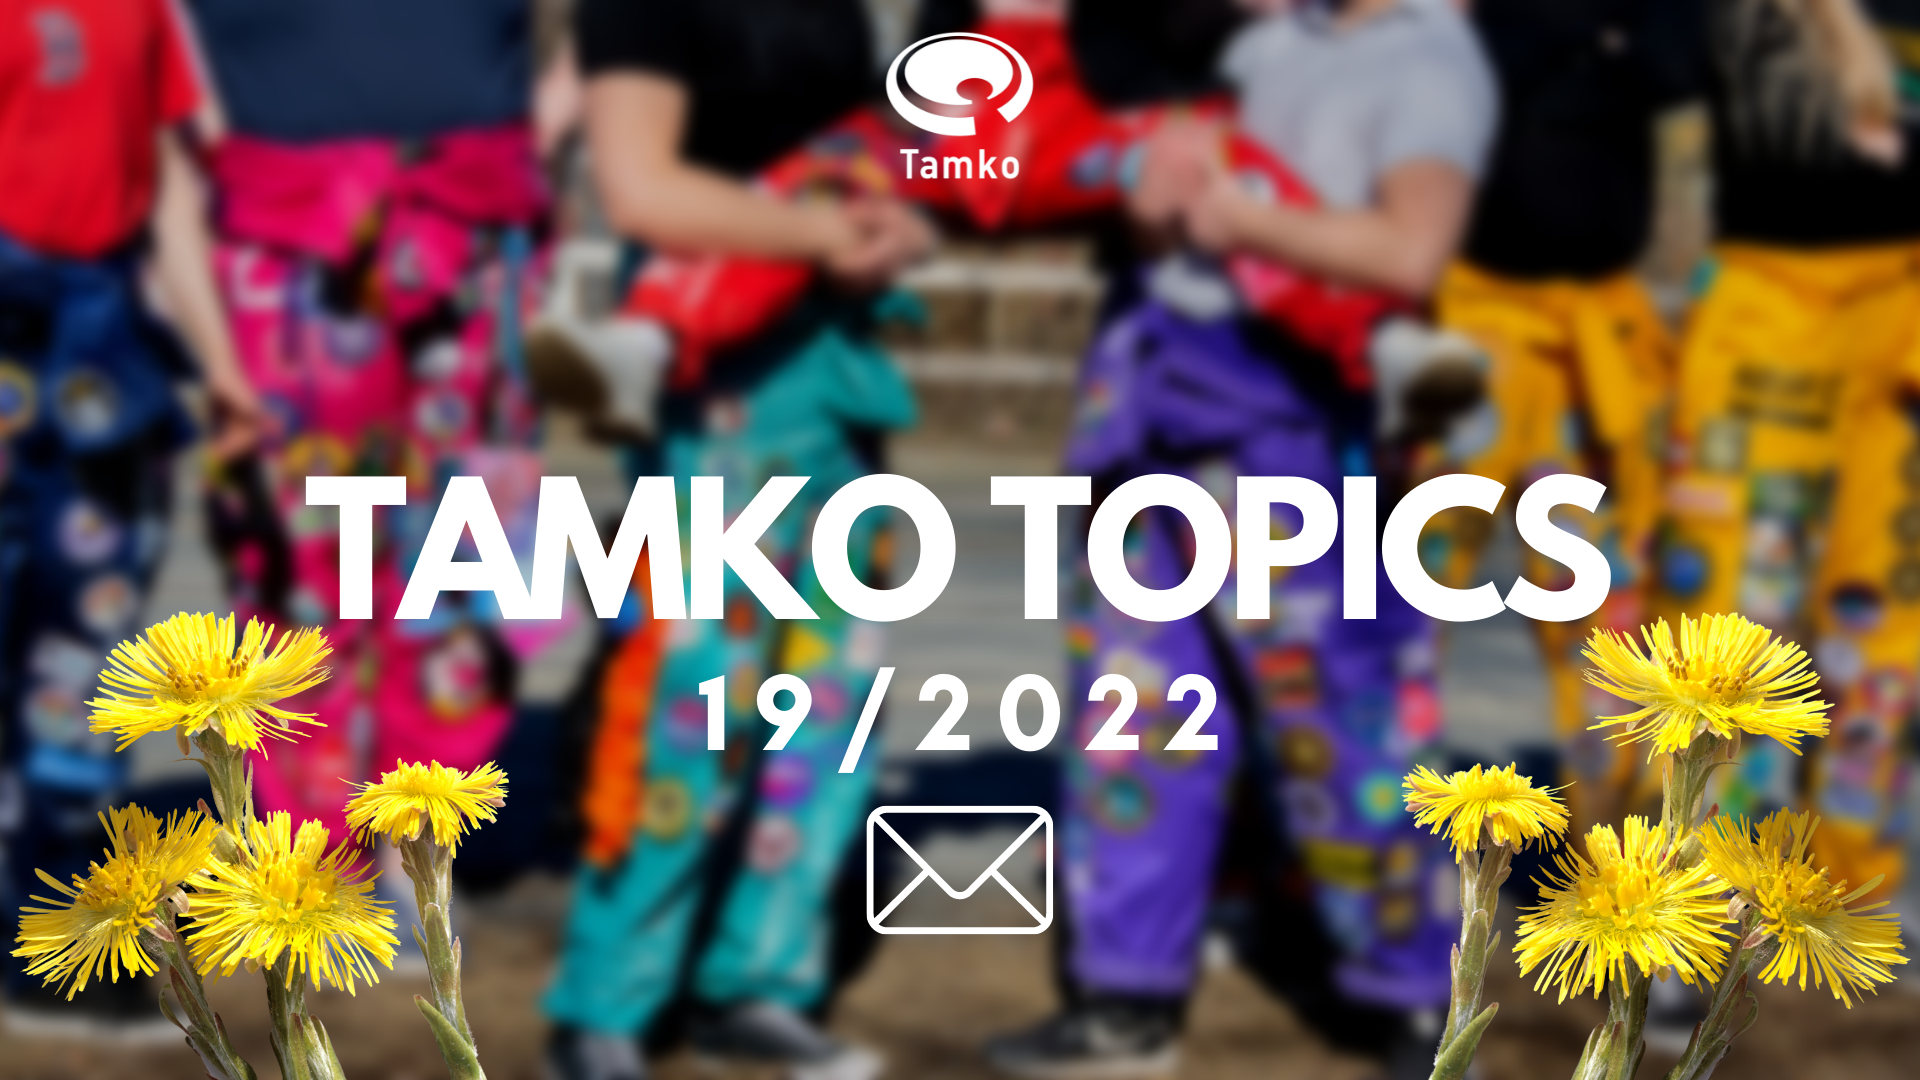 TAMKO TOPICS 19/2022